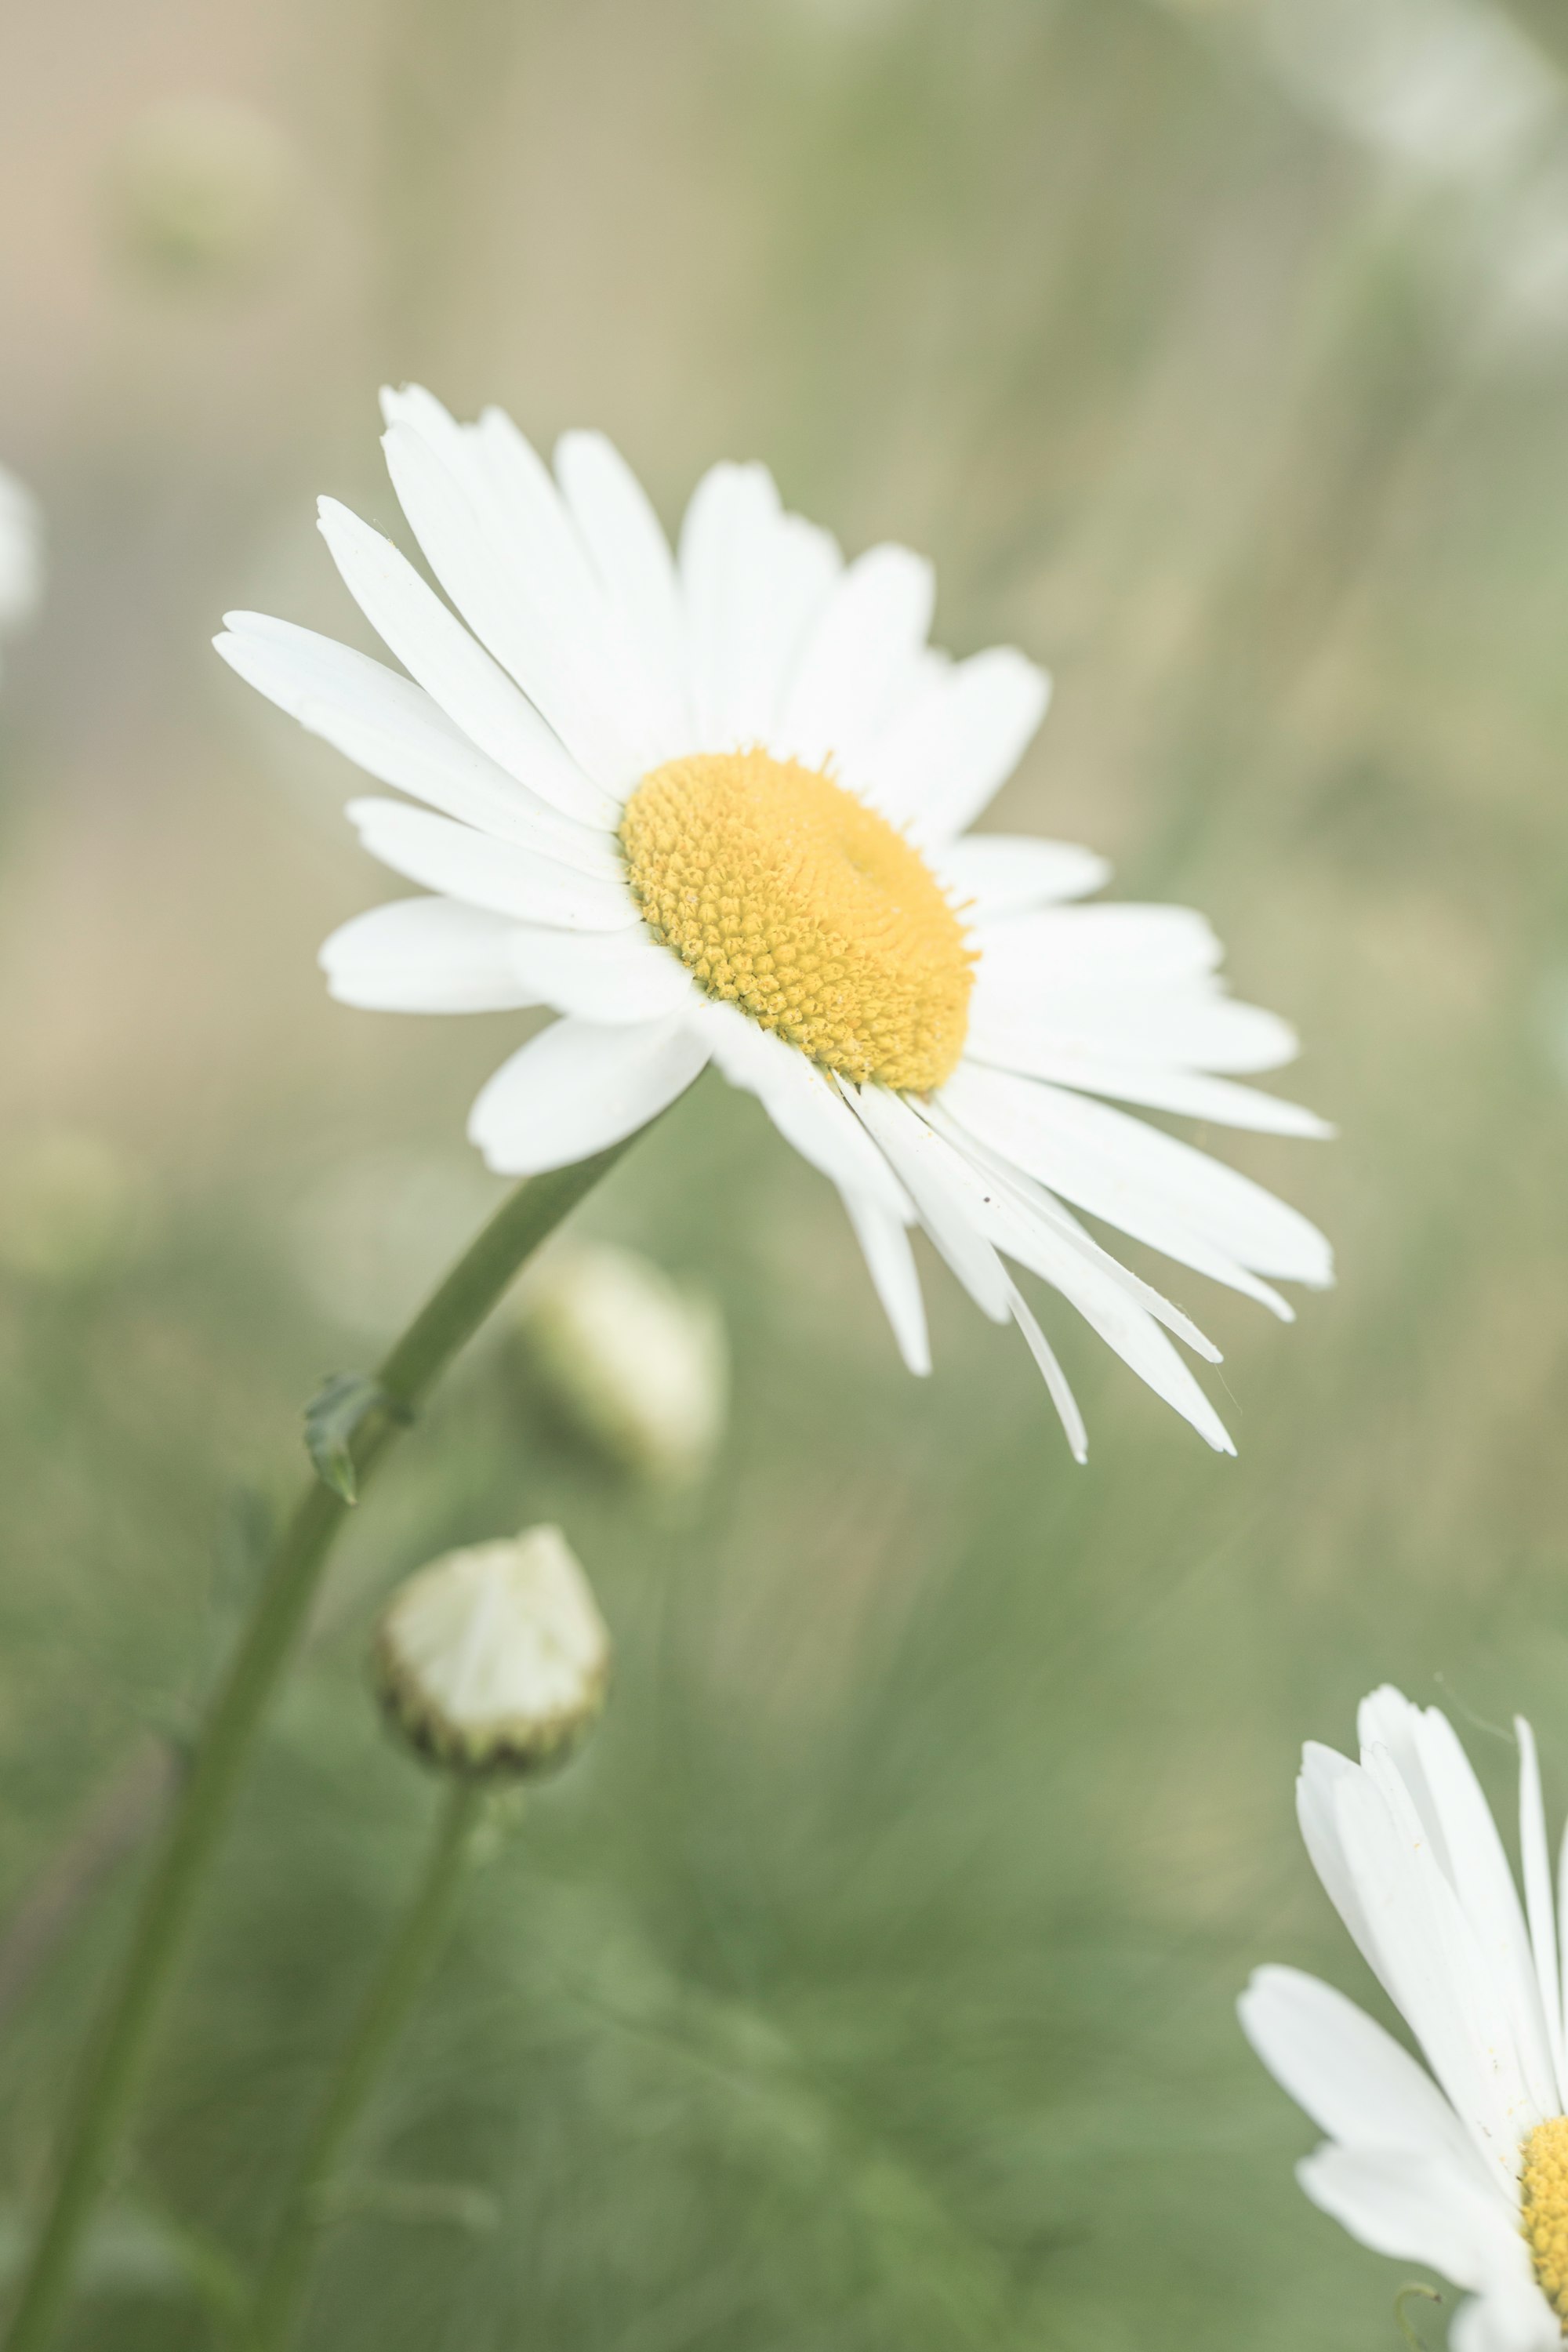 White and yellow daisy flower 